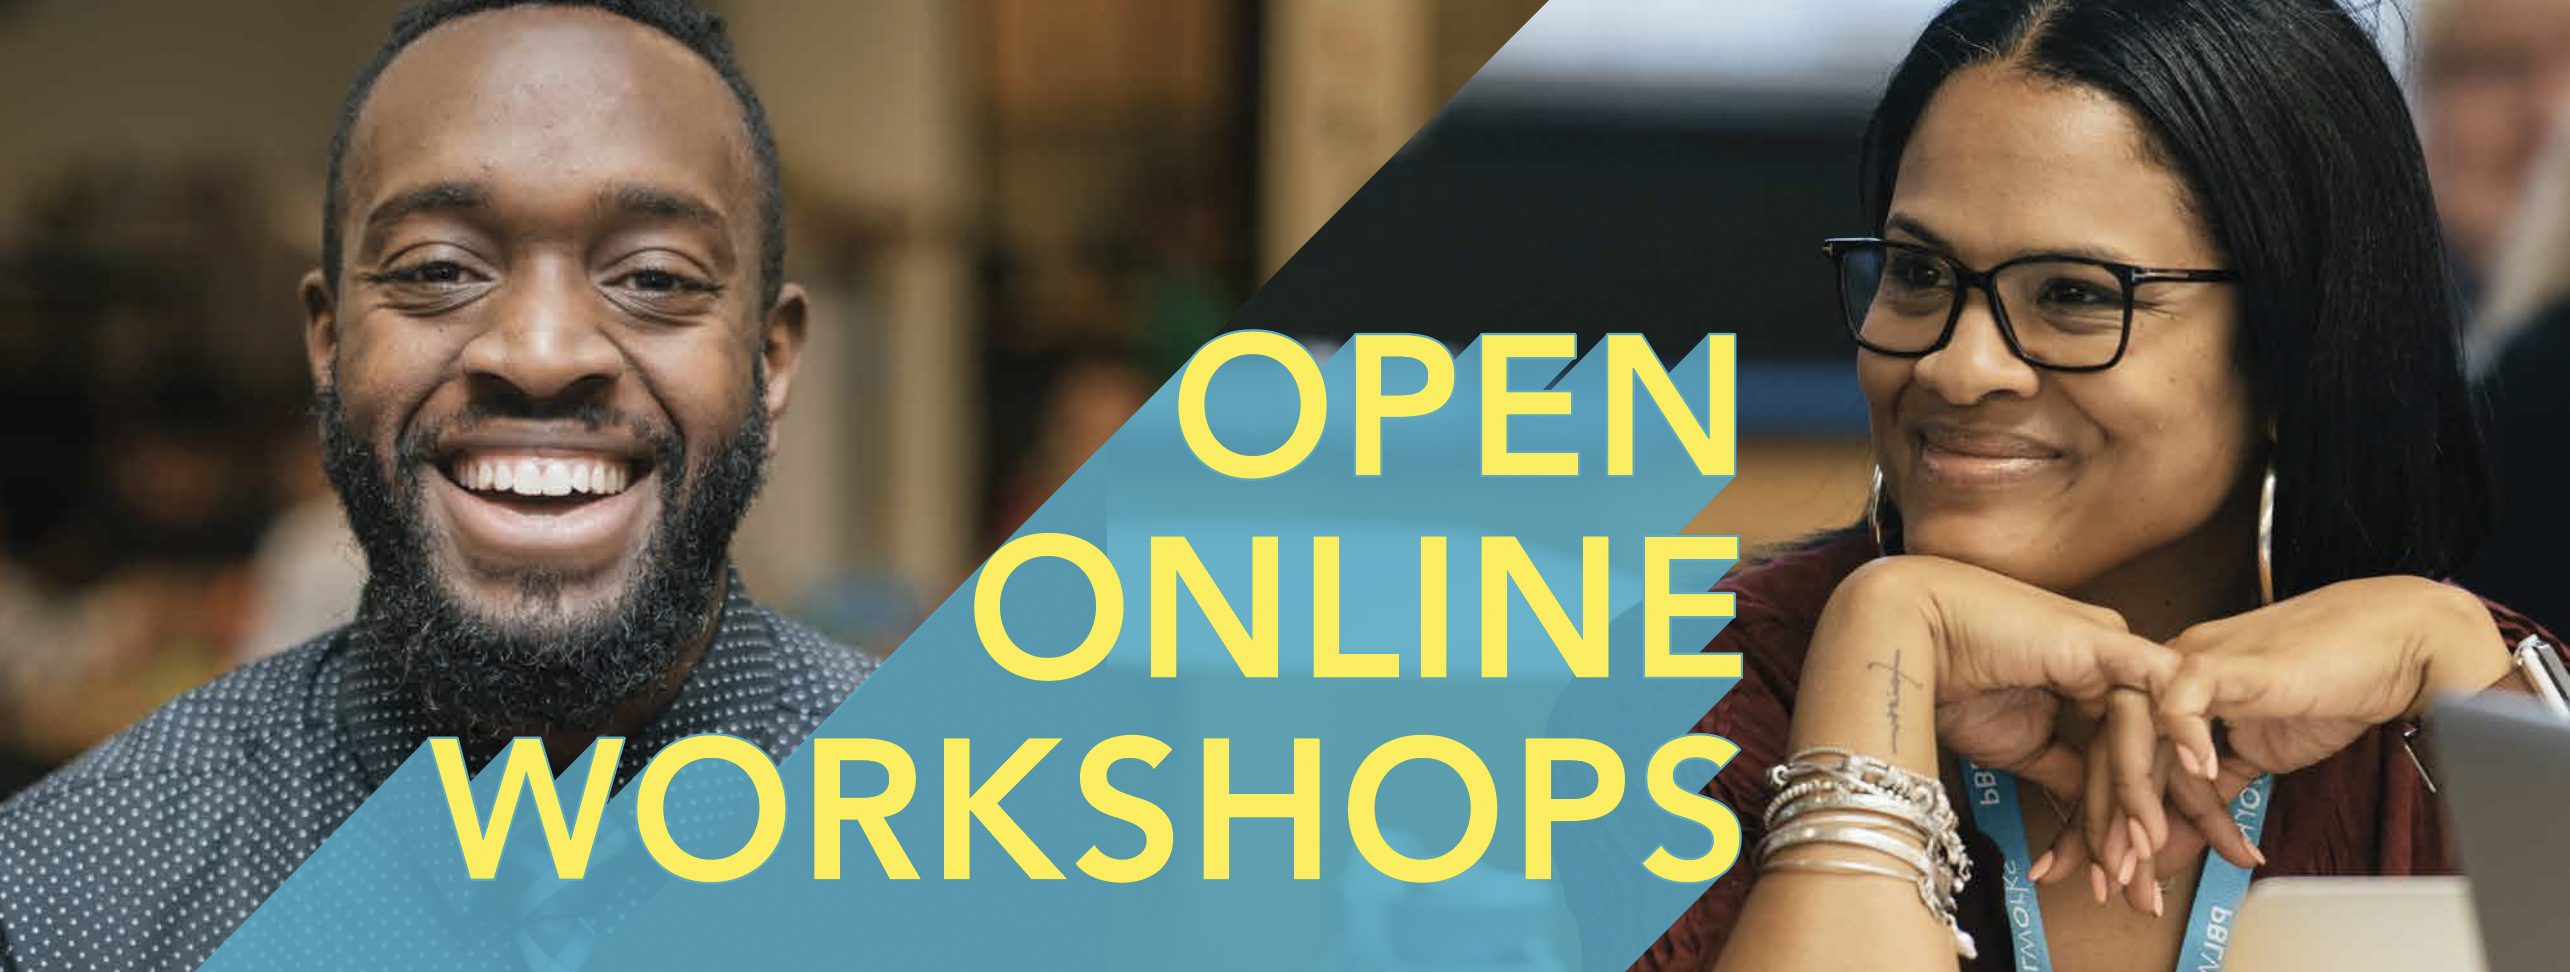 Open Online Workshops